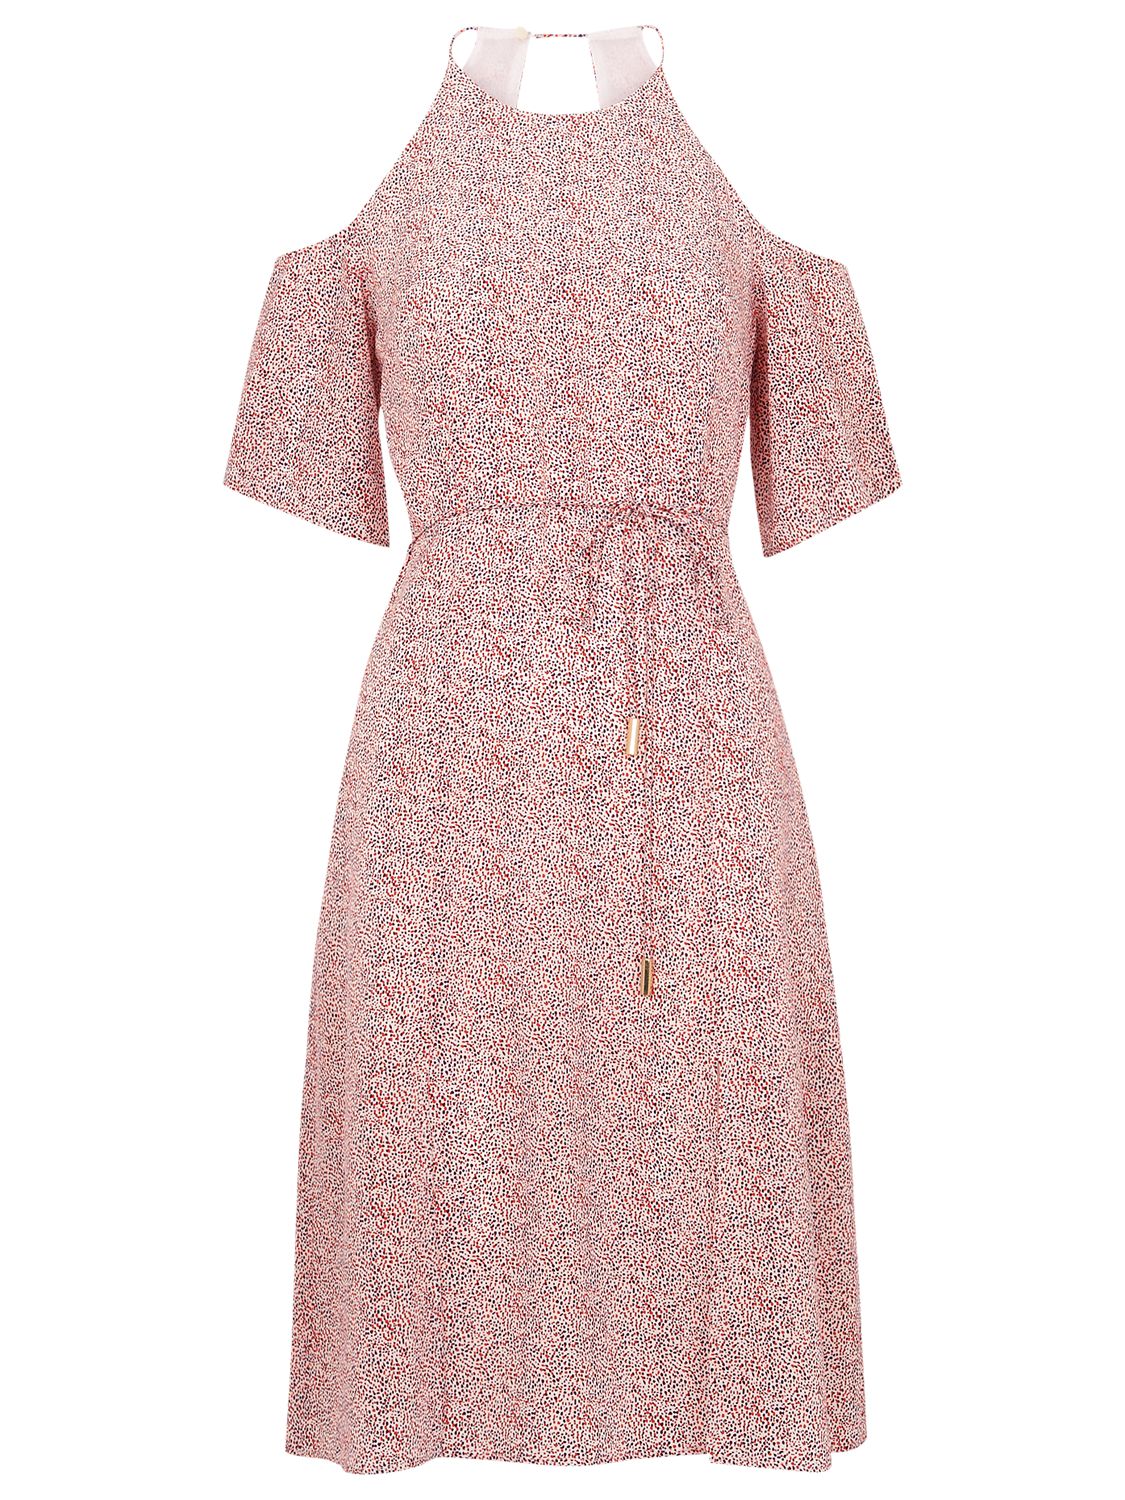 Whistles Double Dot Silk Dress, Pink at John Lewis & Partners